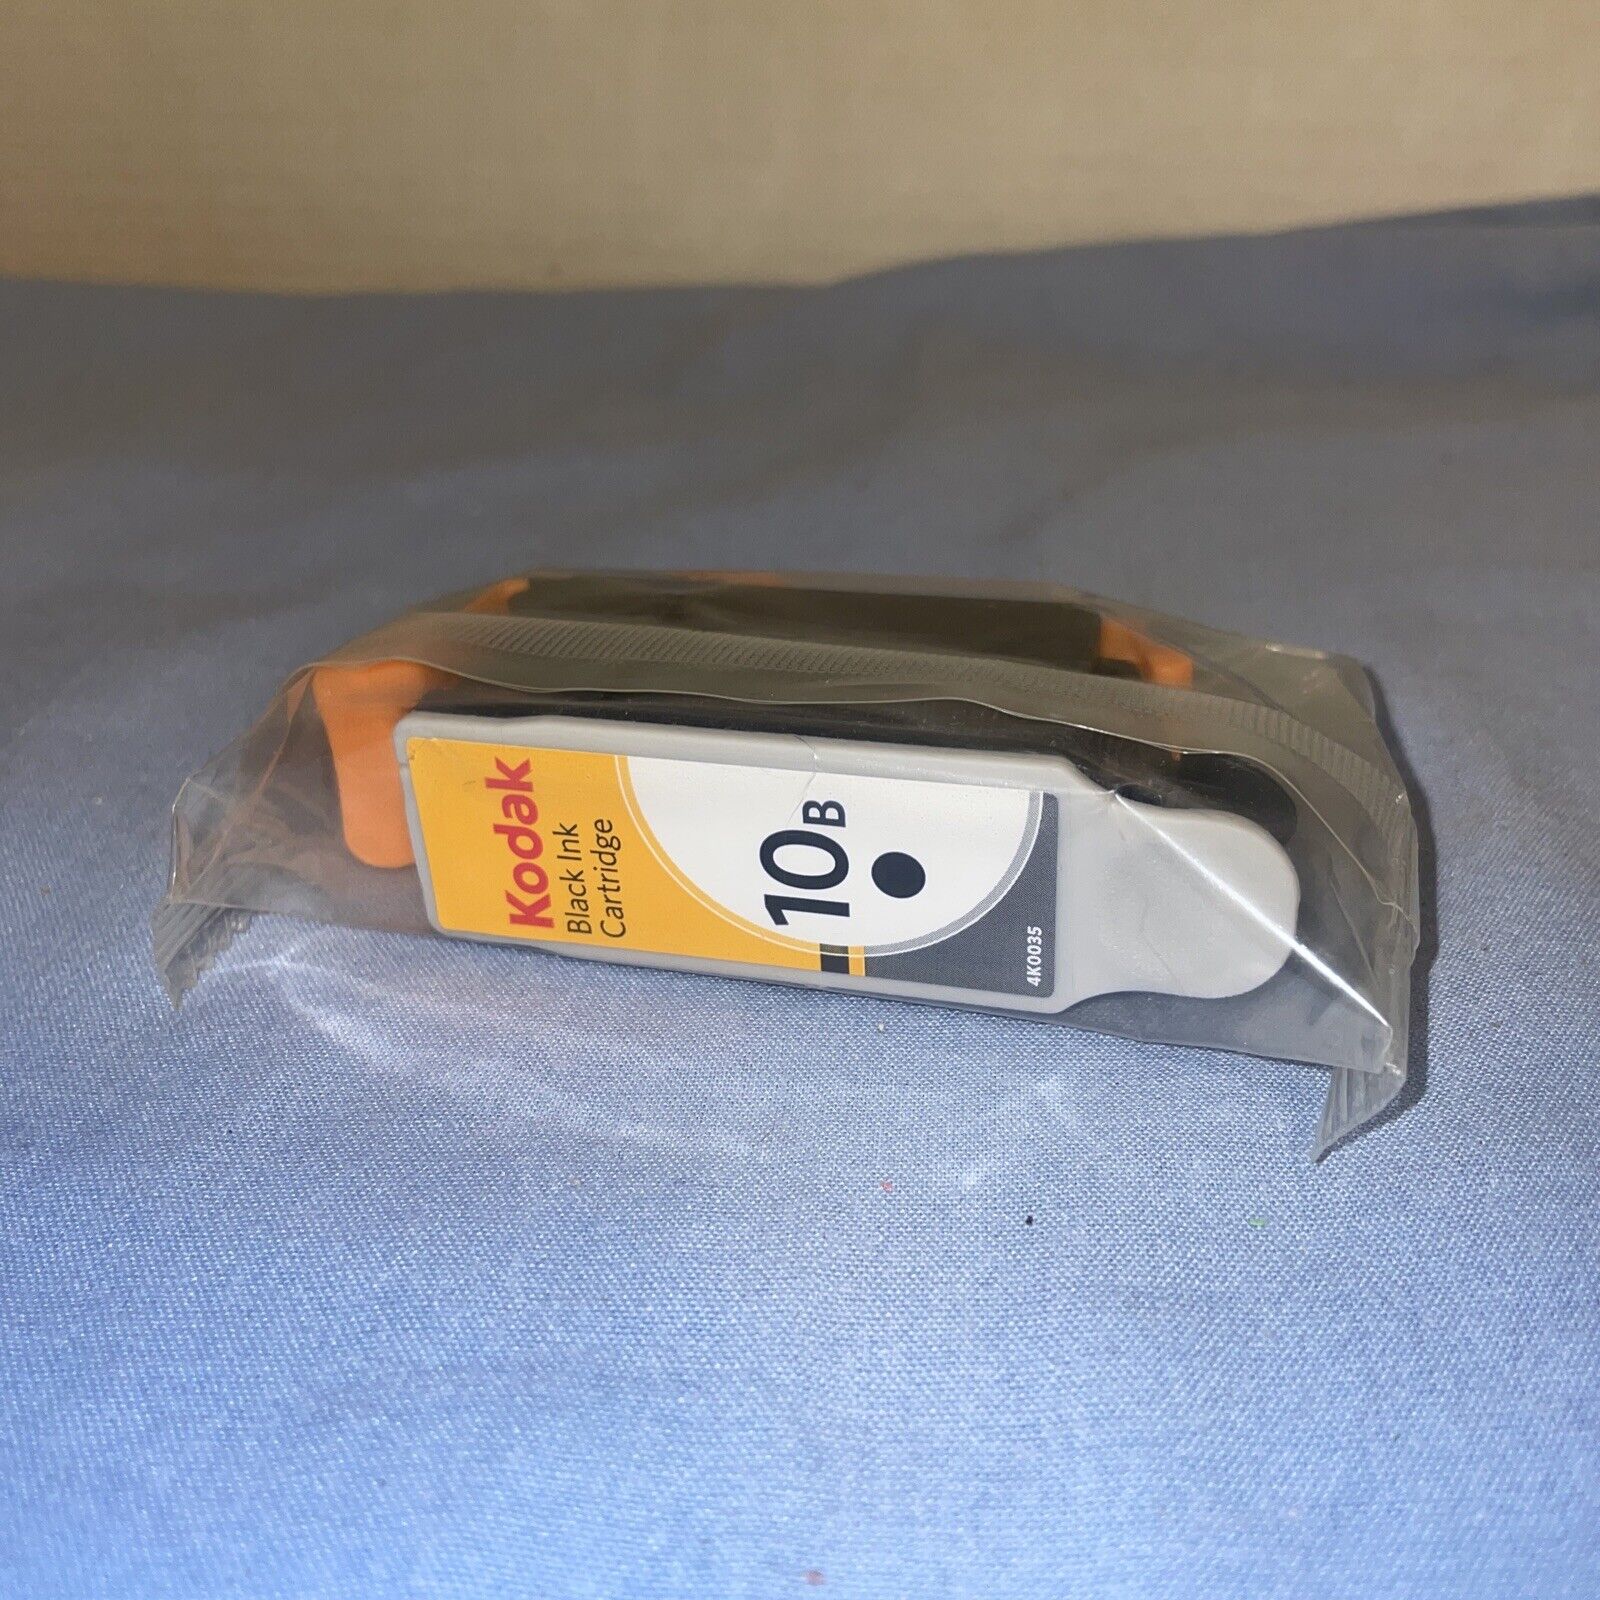 Kodak Black Ink Cartridge 10B New in package-no Box - Estate Find